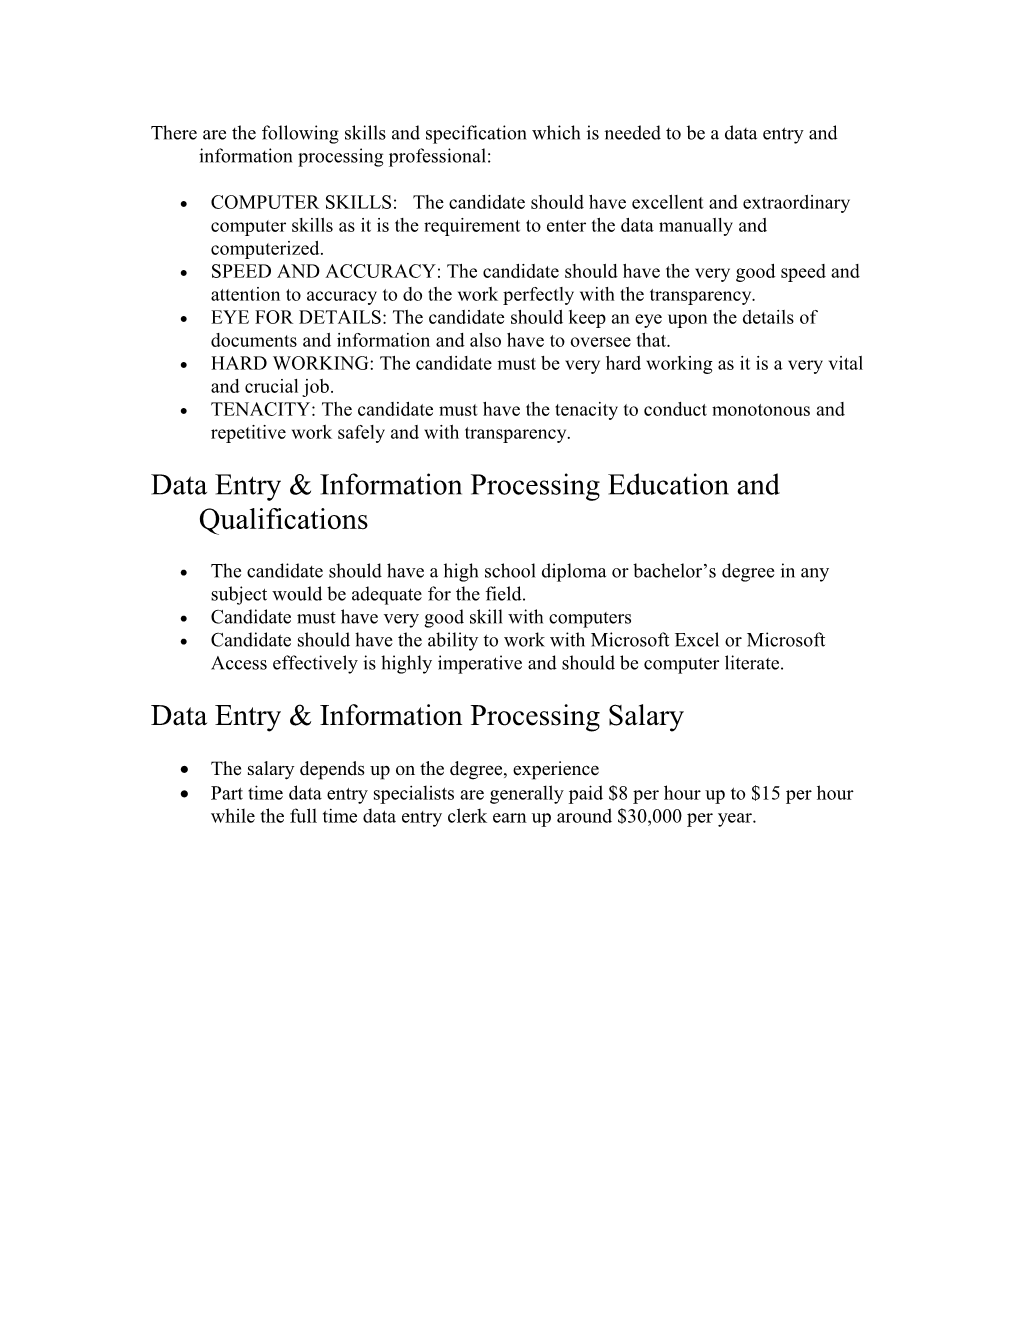 Data Entry & Information Processing Job Description